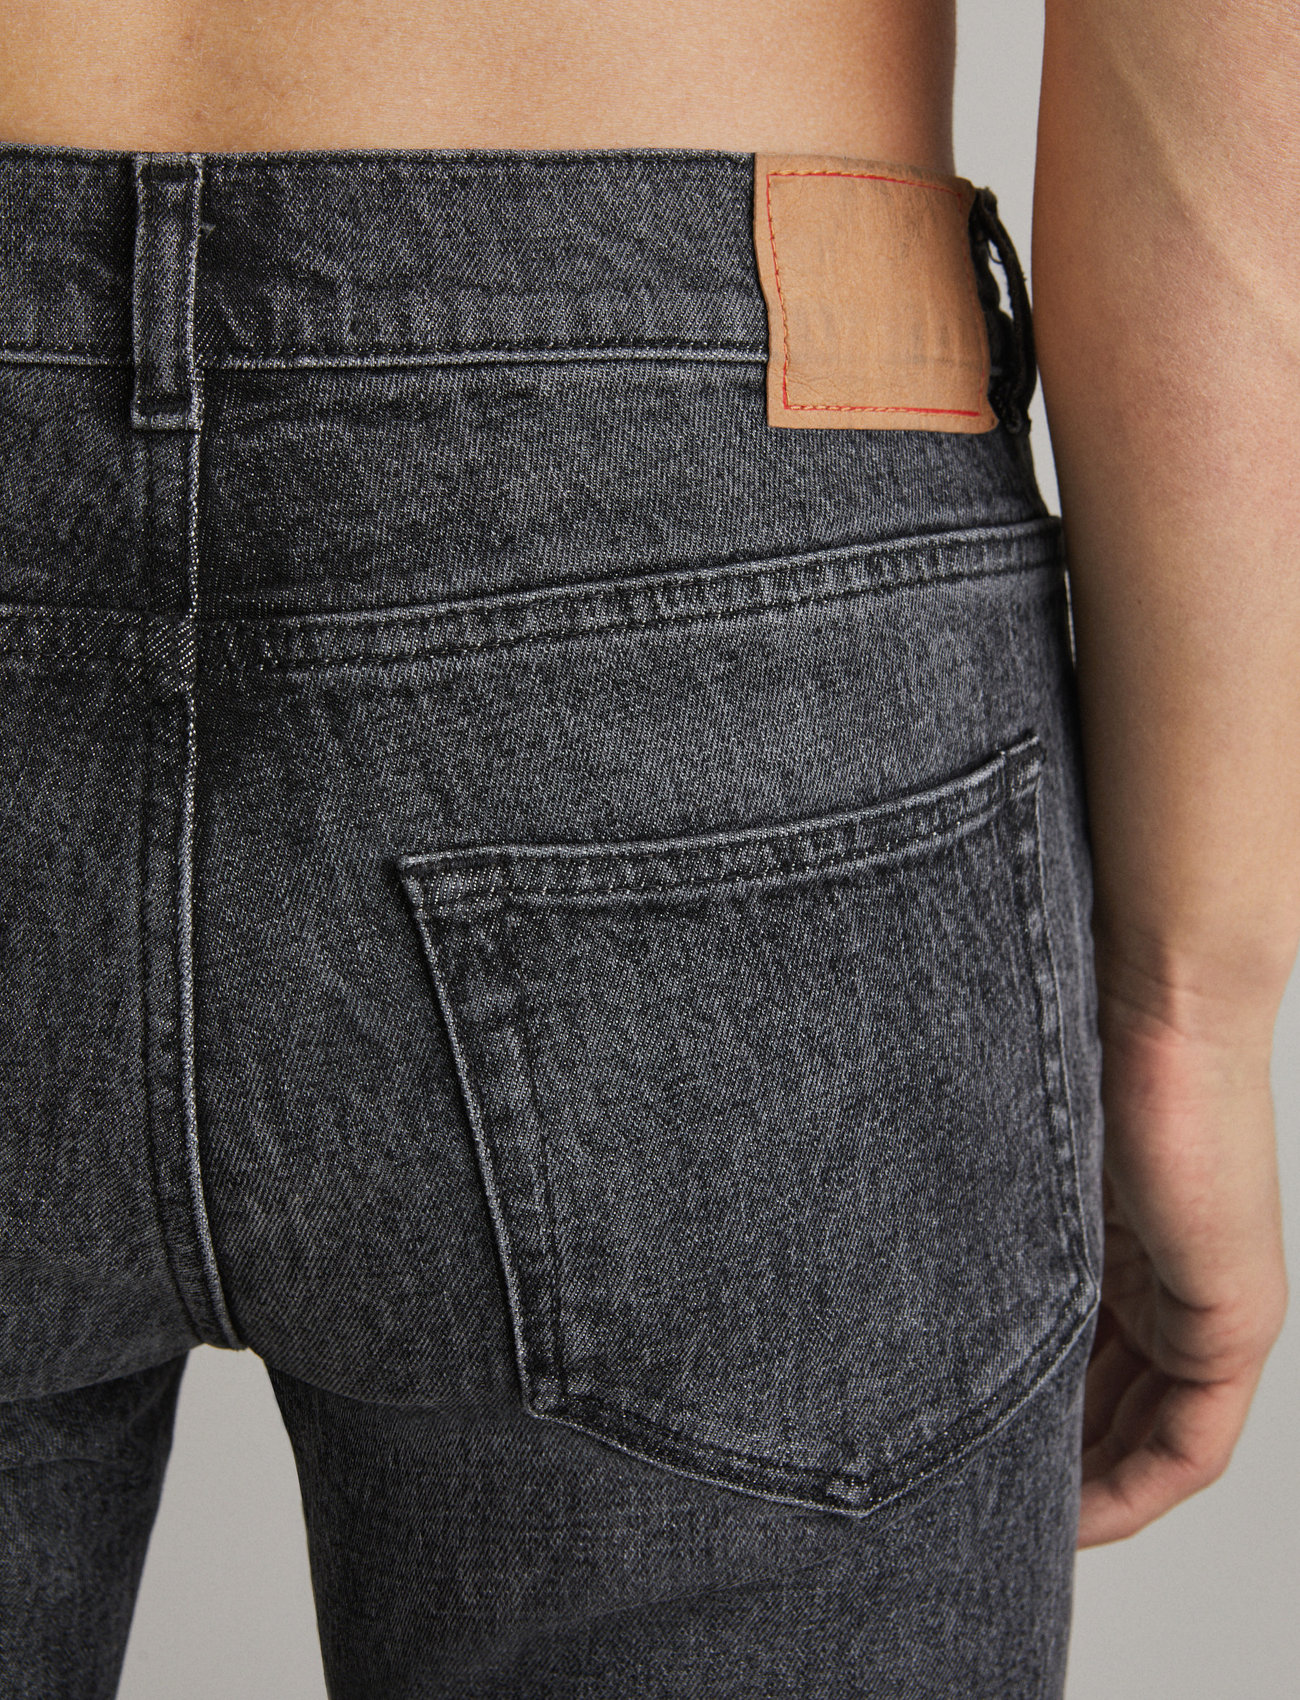 Jeanerica - SM001 Slim Jeans - chemises basiques - blackvintage82 - 5